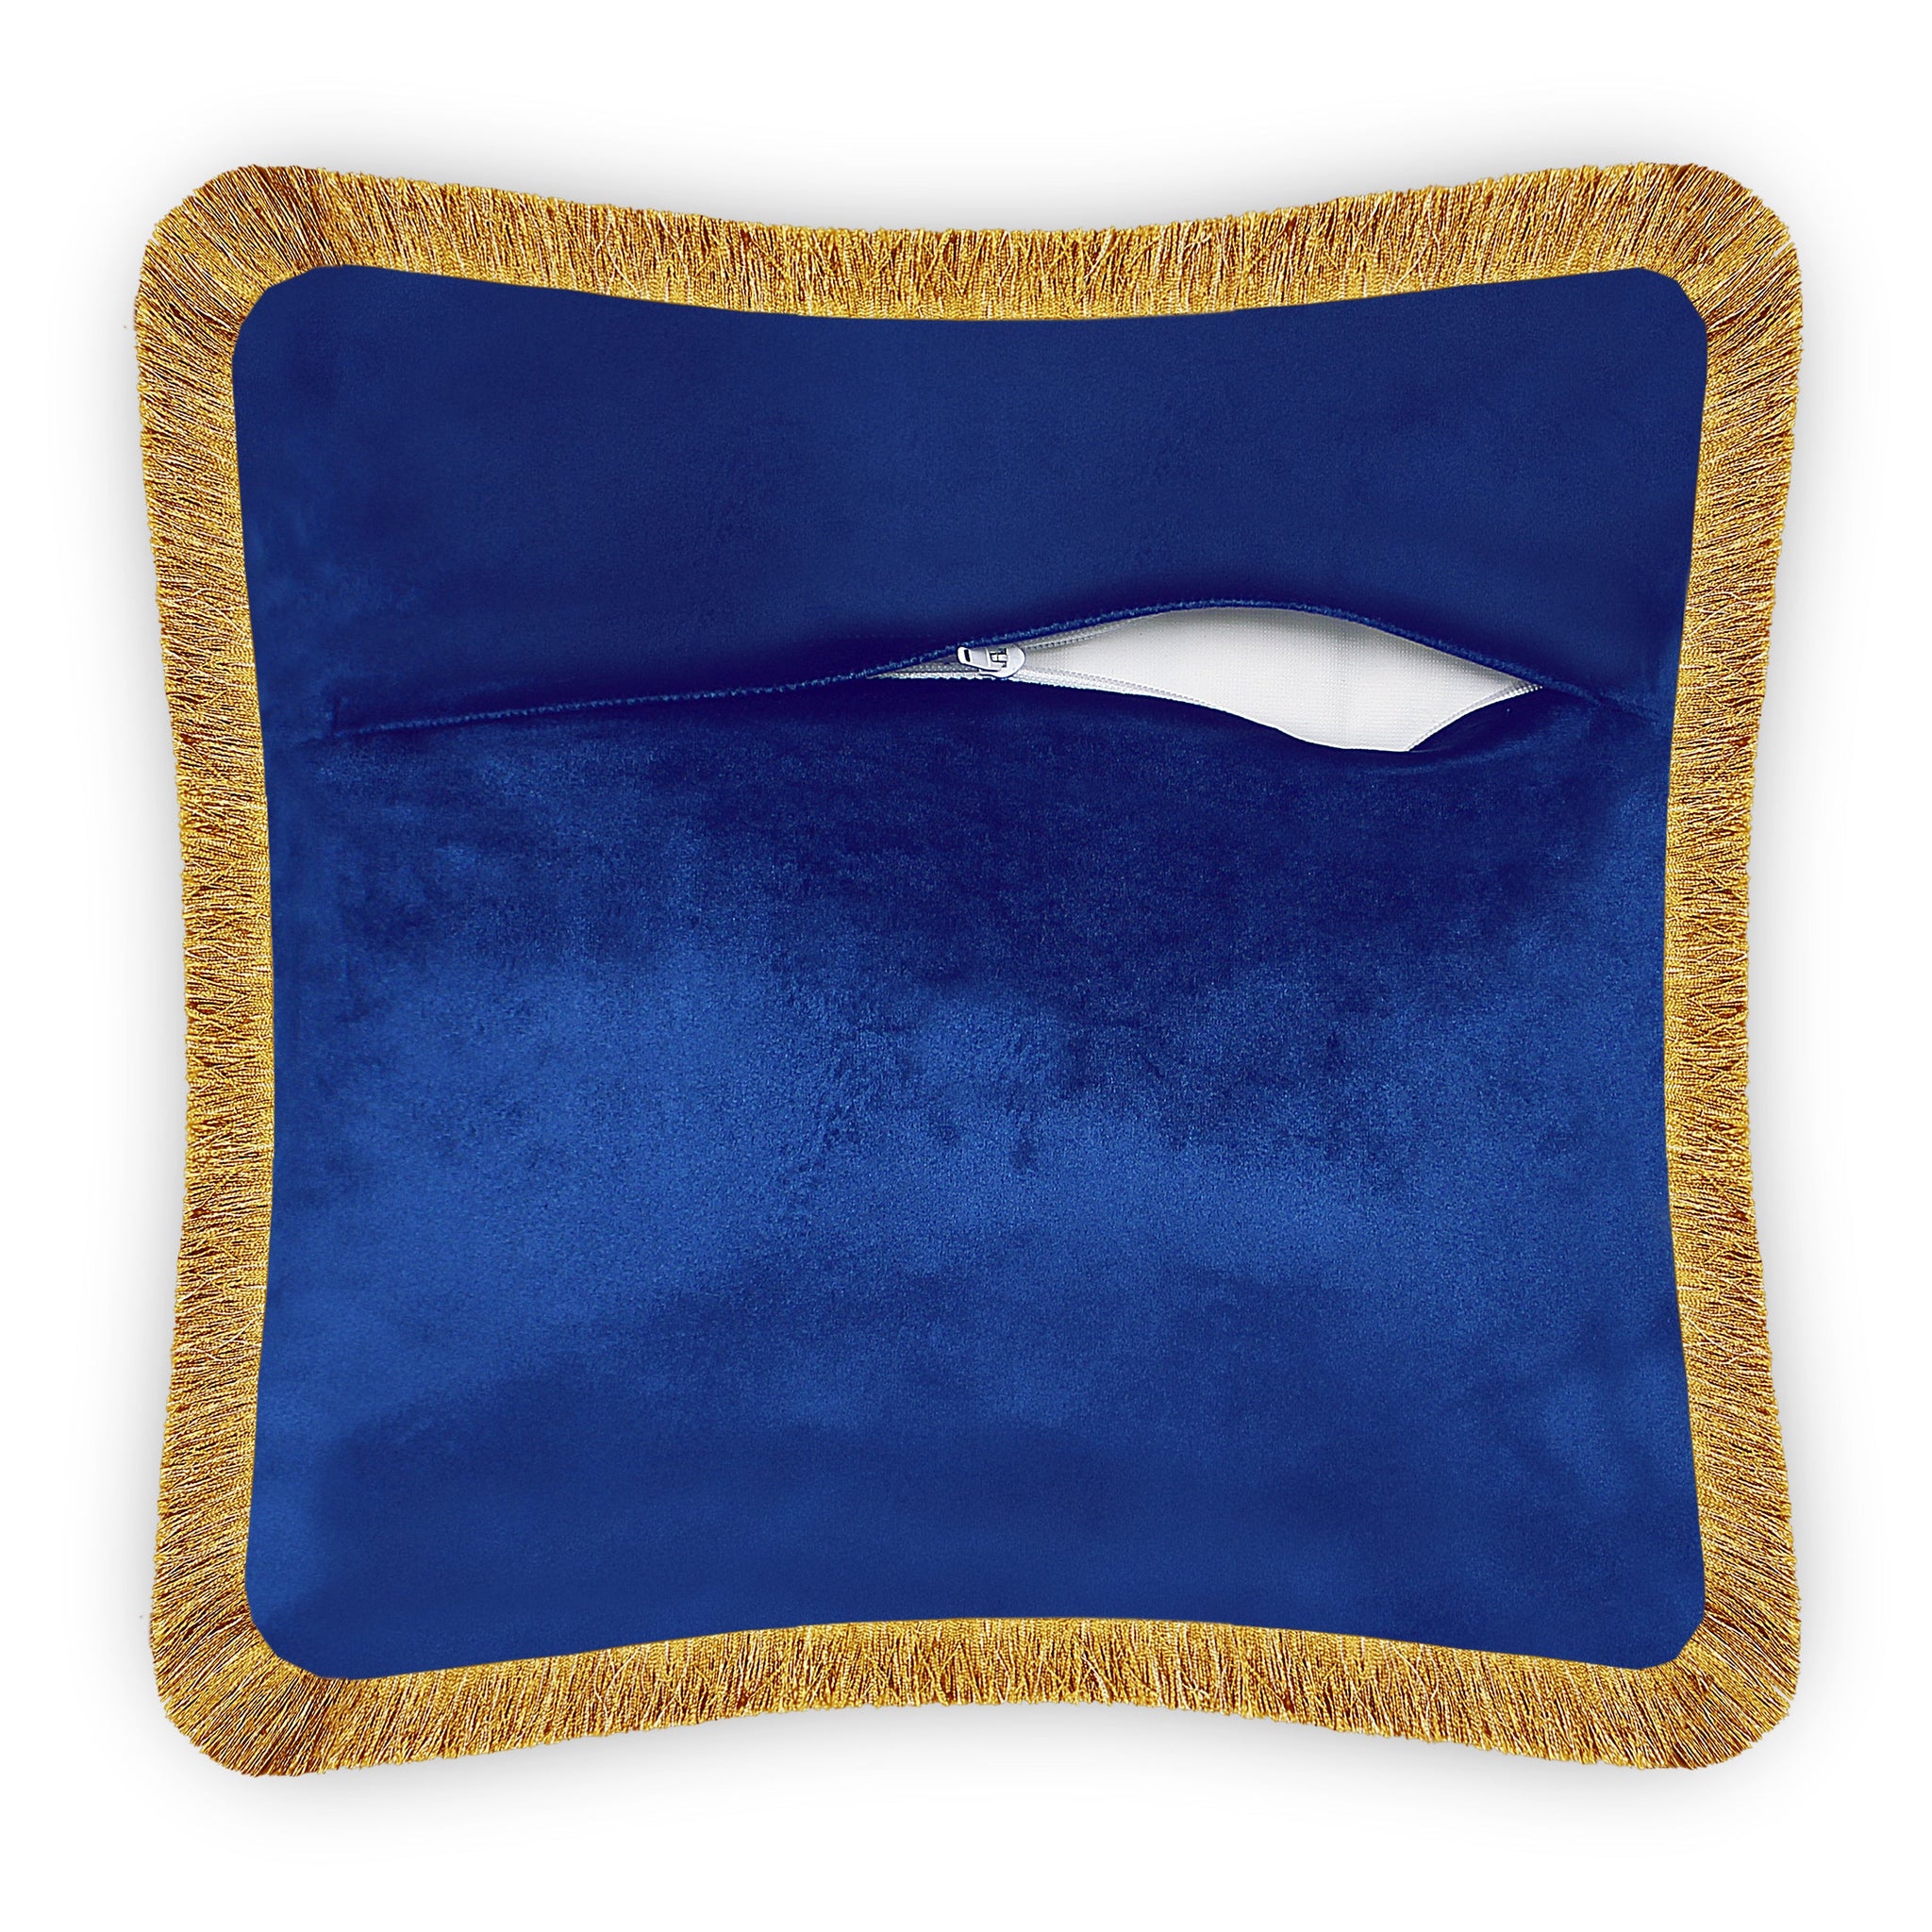 Blue Velvet Cushion Cover Ethnic Aboriginal Geometric Decorative Pillowcase Home Decor Throw Pillow for Sofa Chair Living Room 45x45 cm 18x18 In